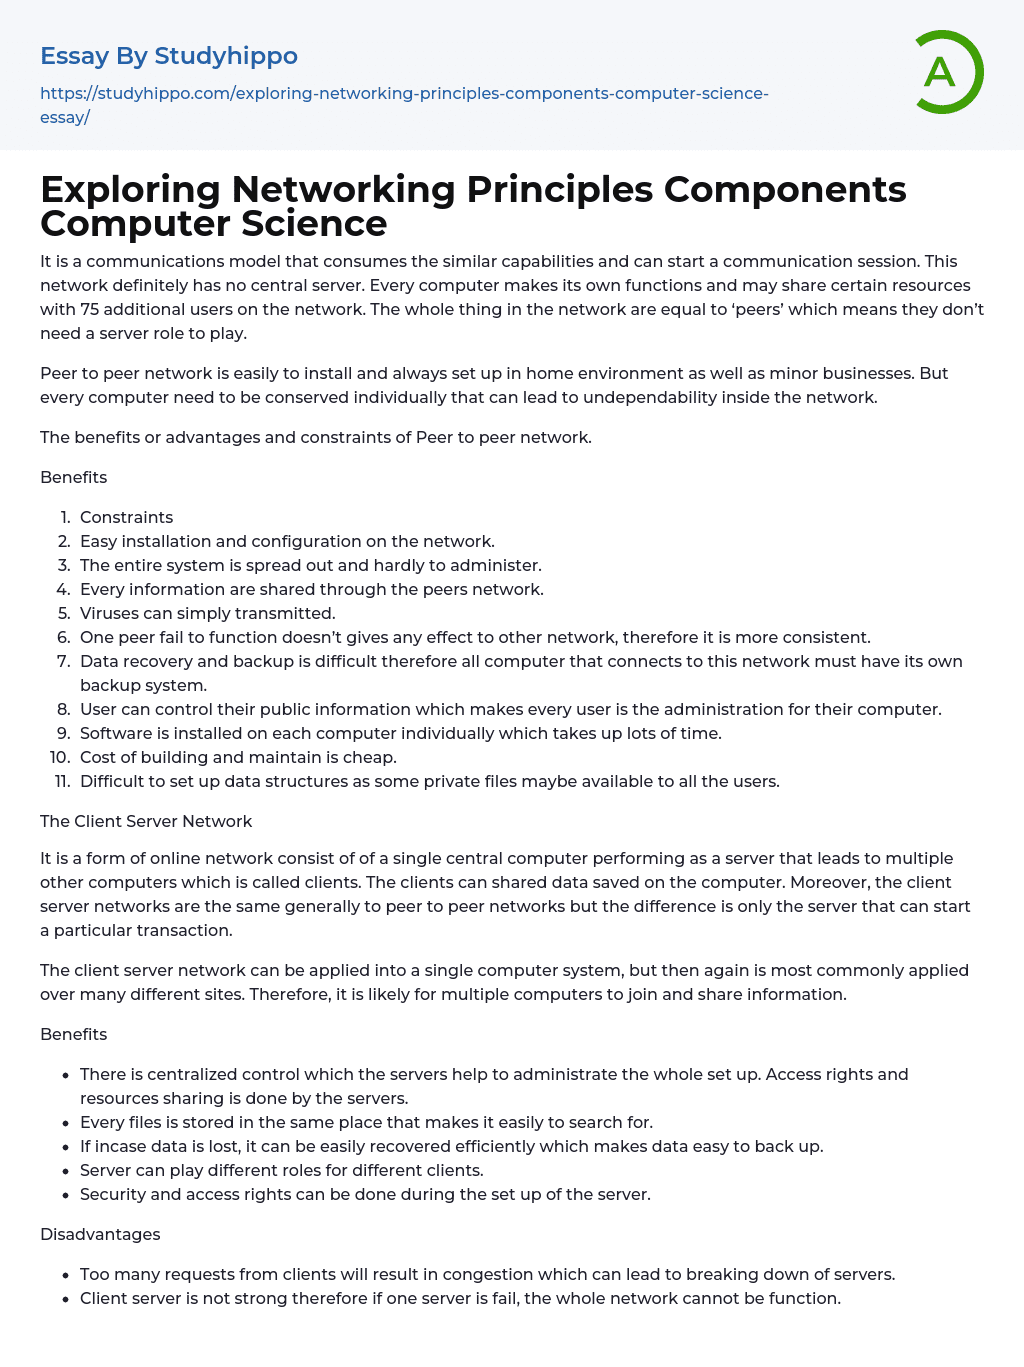 Exploring Networking Principles Components Computer Science Essay Example